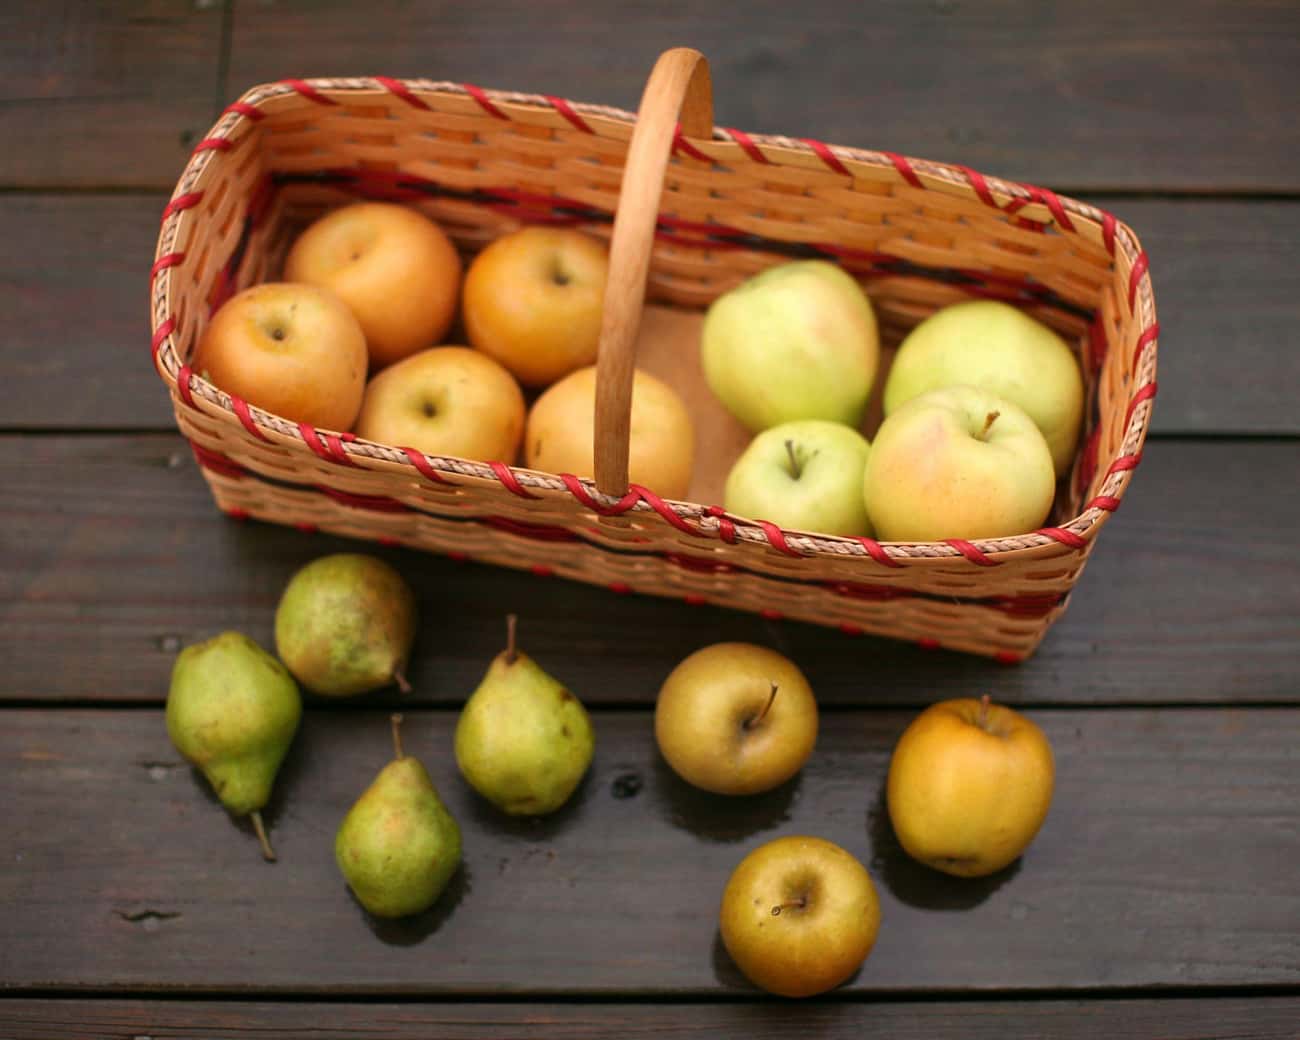 Aries (March 21 - April 19): Razors In Apples